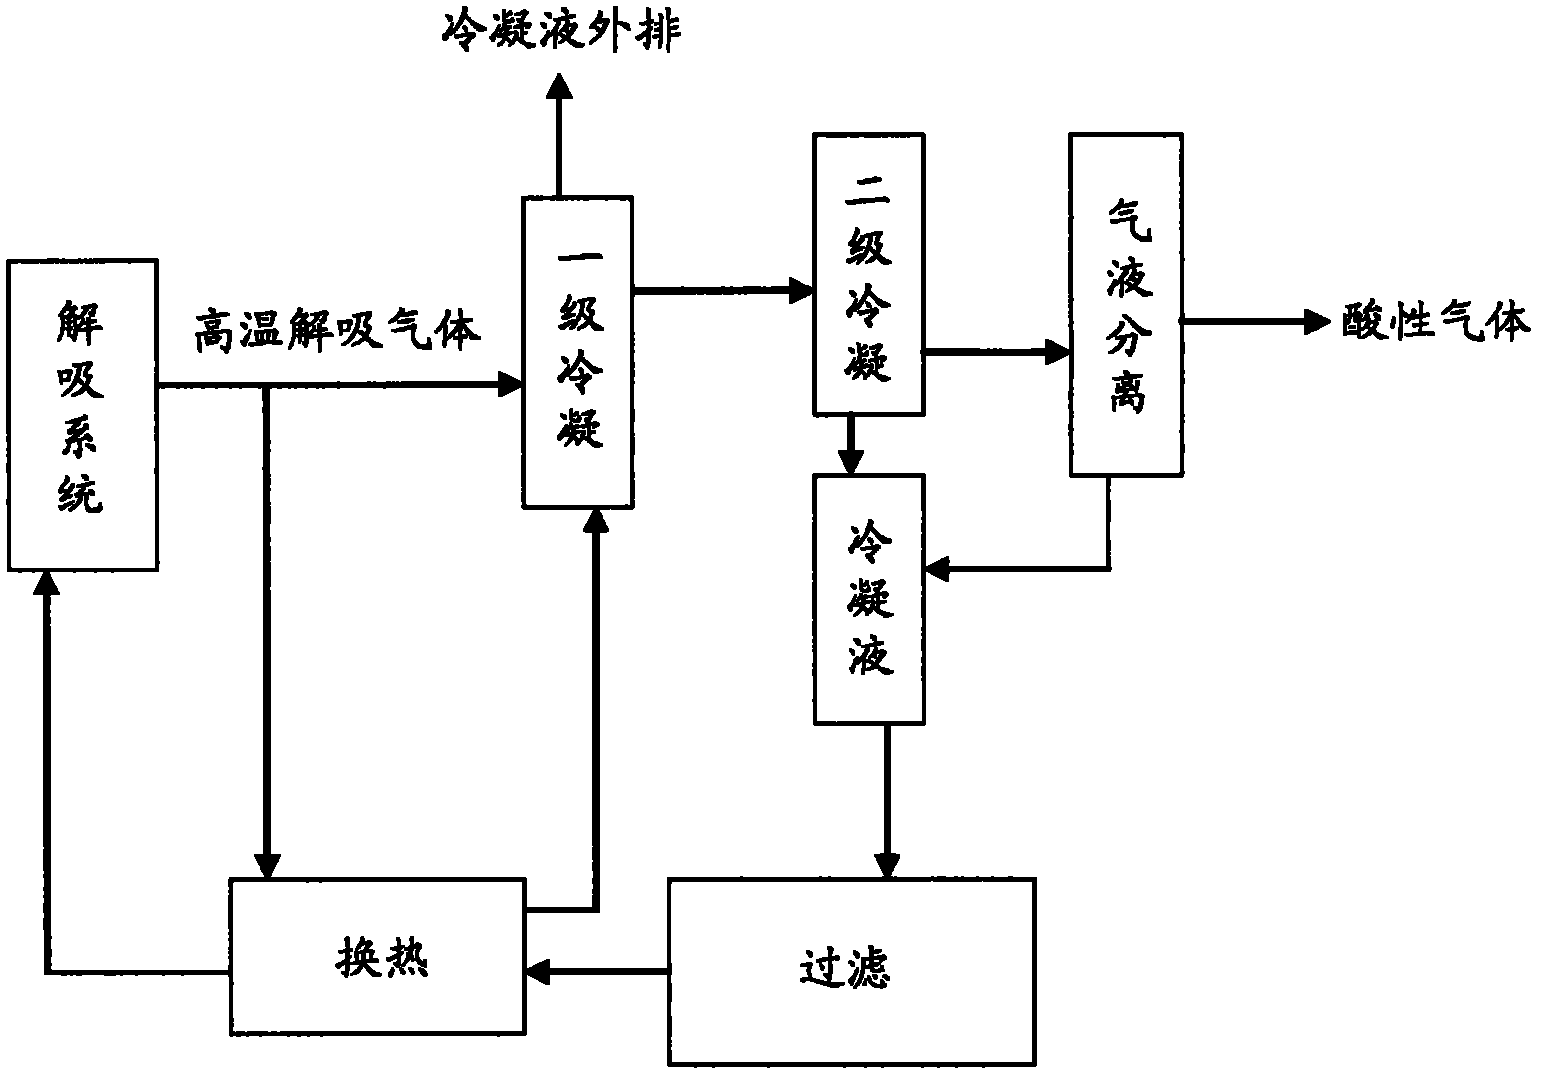 Dehydration method for desorption gas used in desulphurization of flue gas